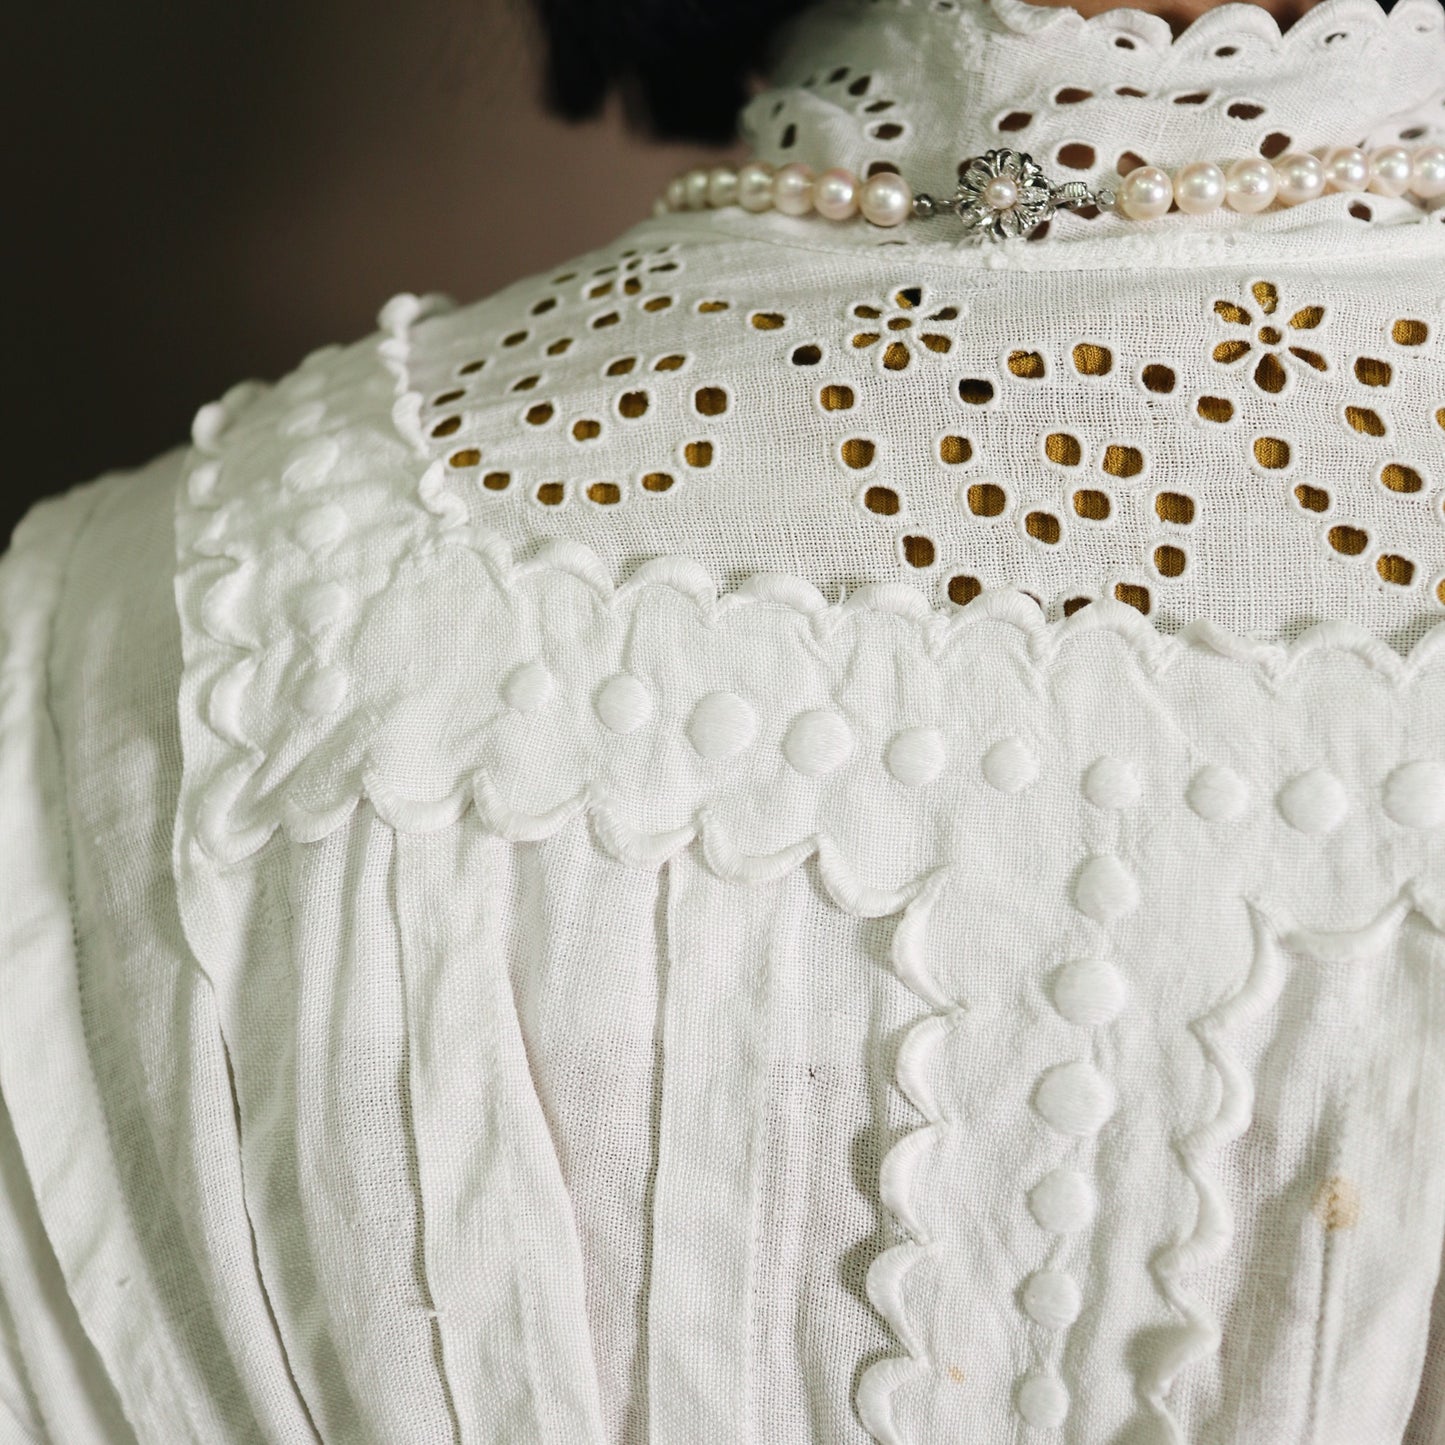 1900s Edwardian antique ladies carved jacket Antique Edwardian blouse